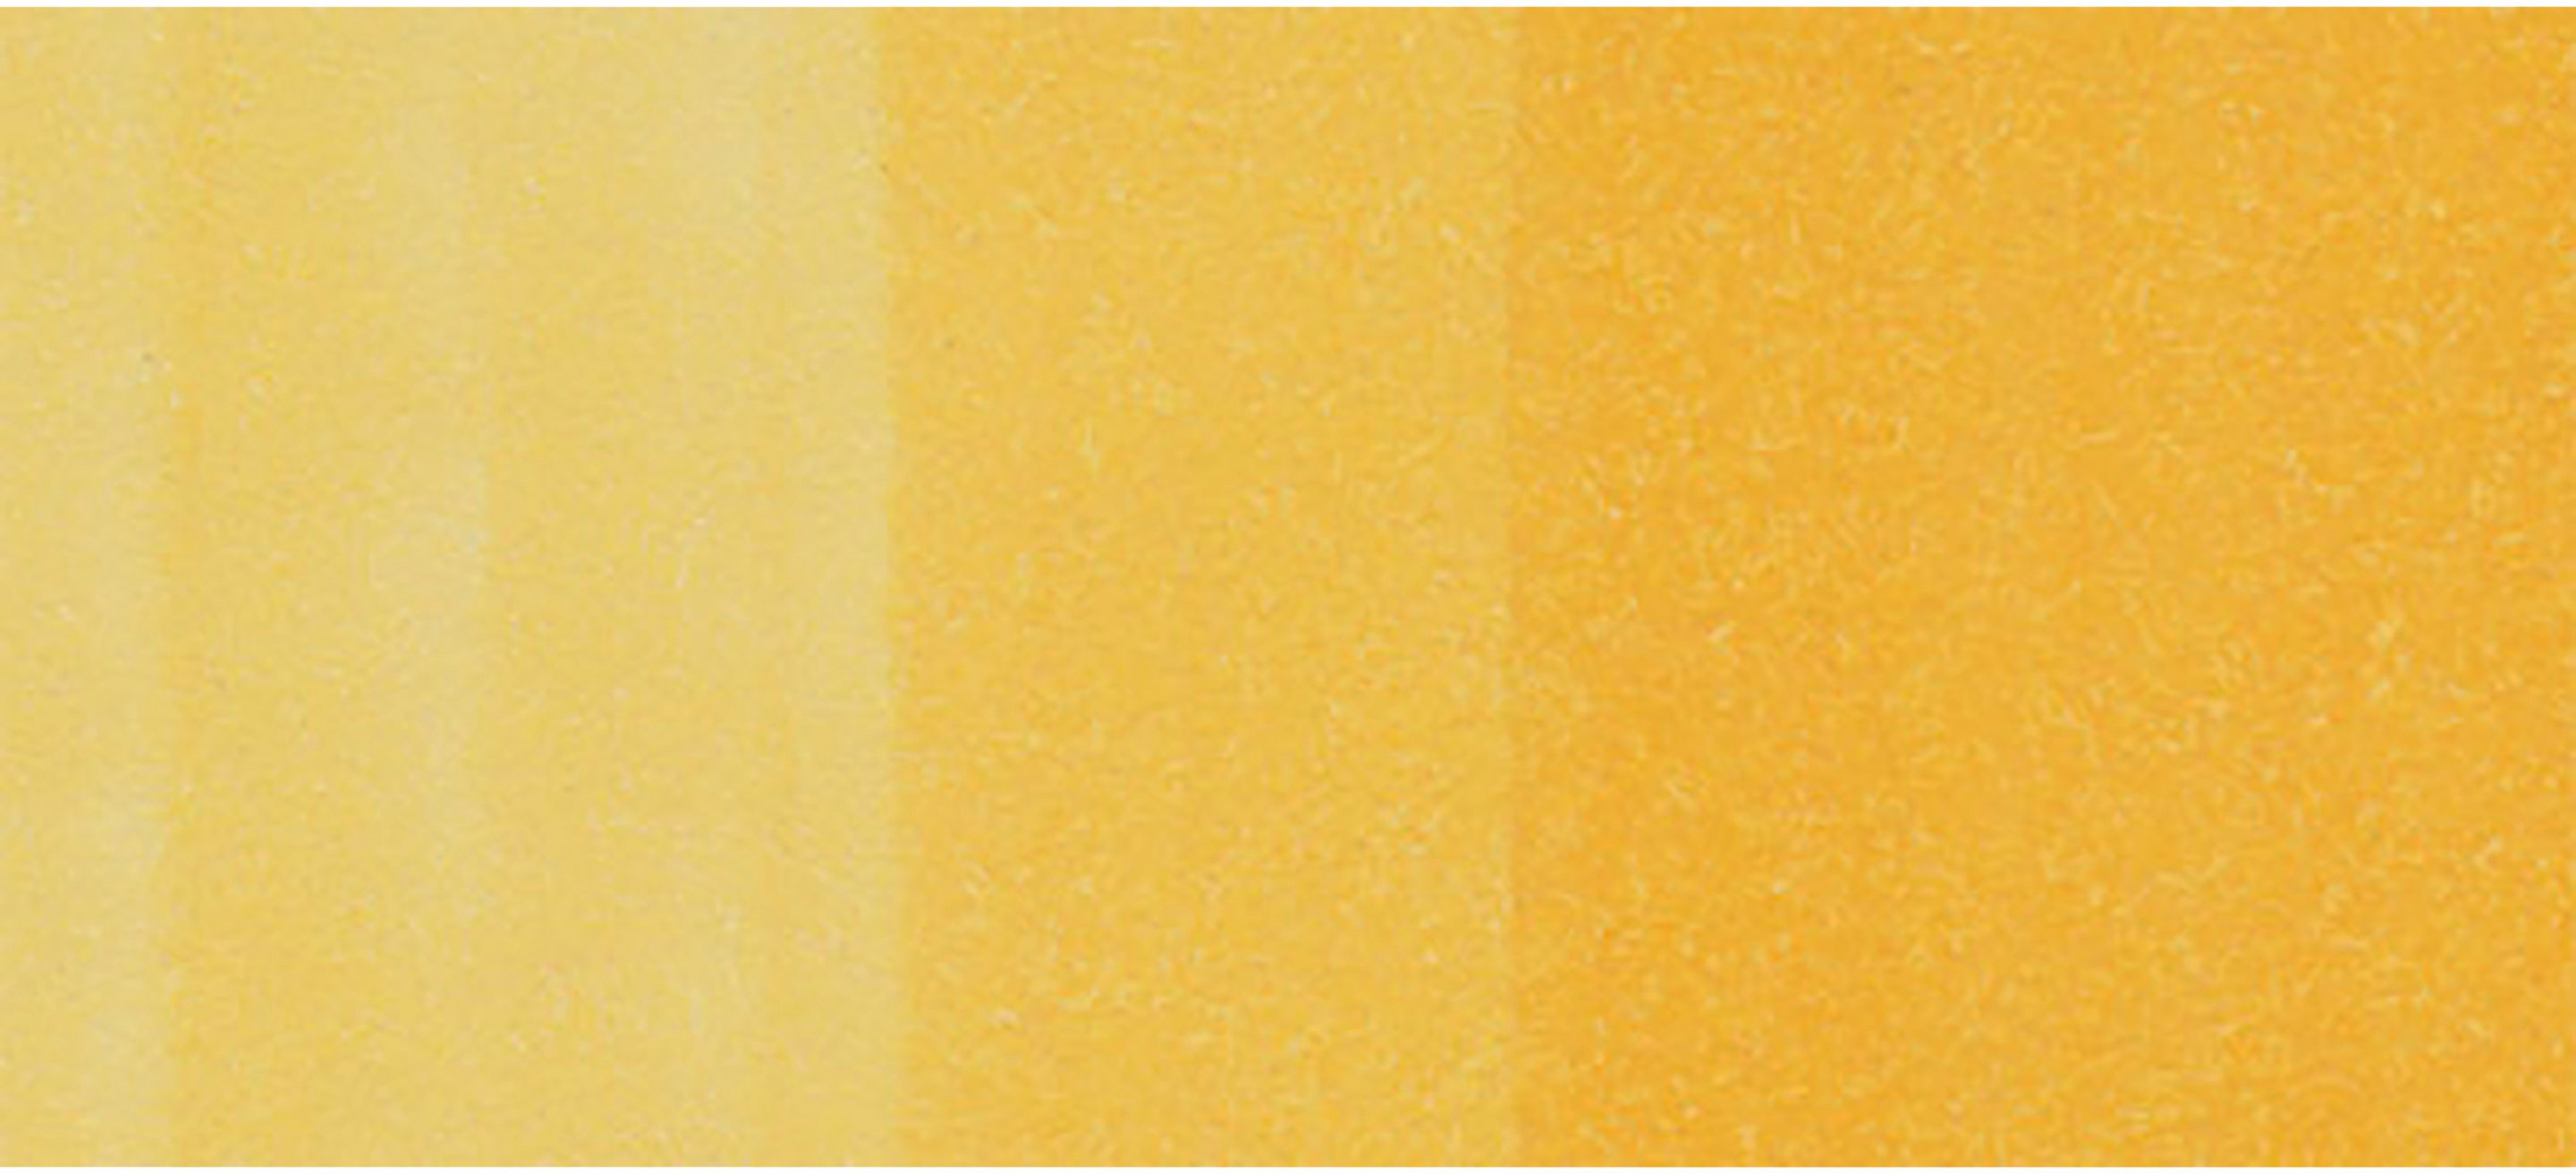 COPIC Marker Sketch 21075277 YR31 - Light Reddish Yellow